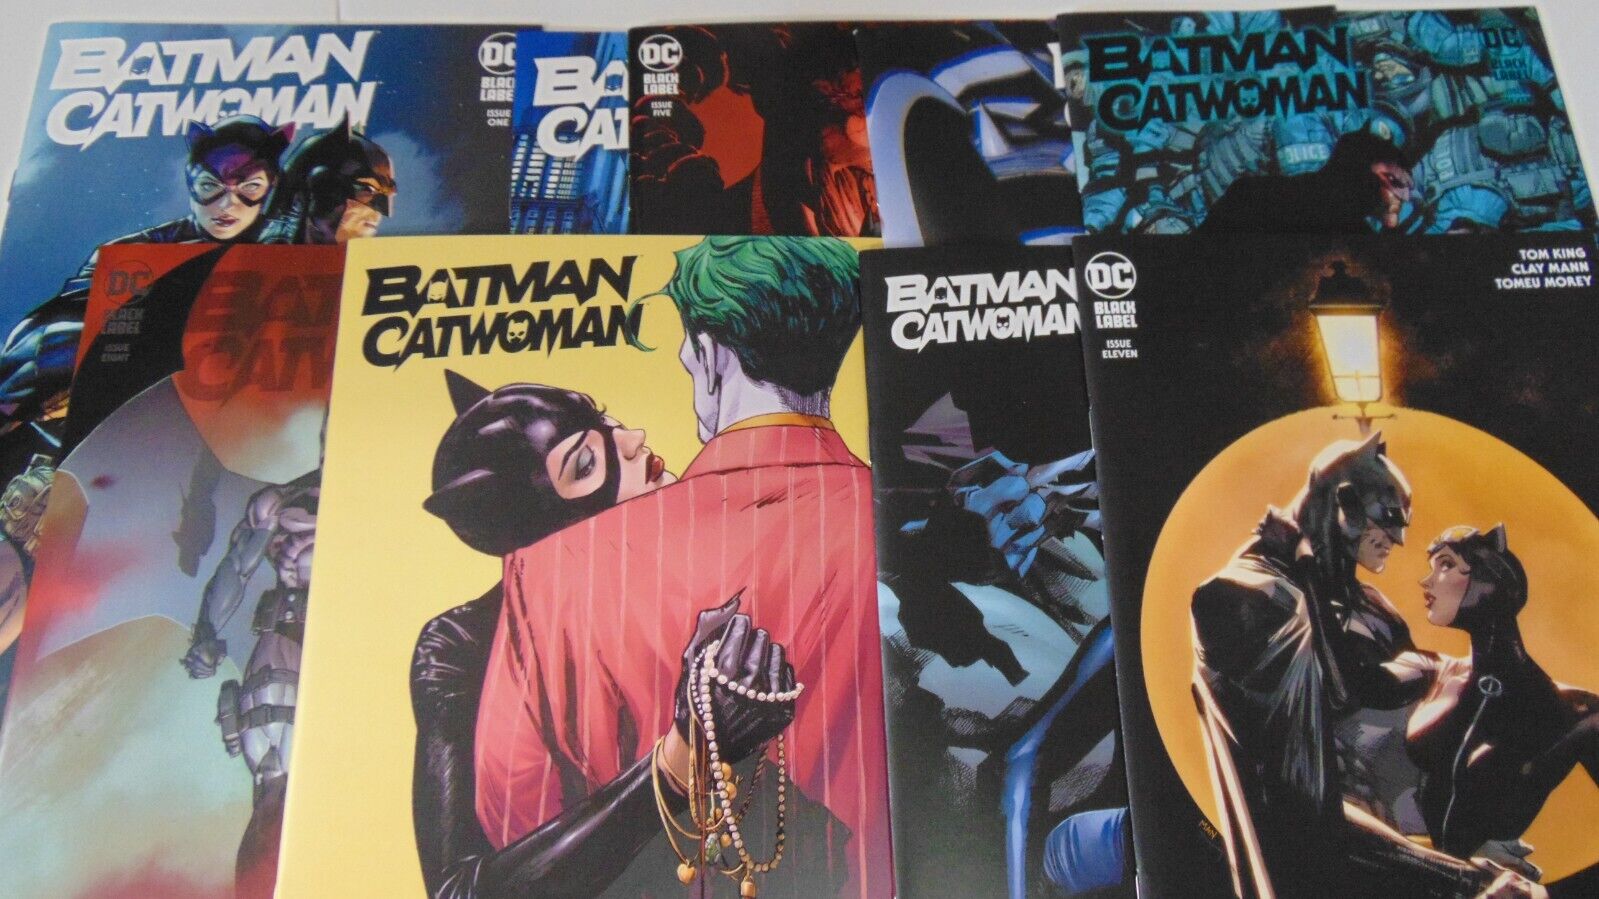 BATMAN/CATWOMAN #1 4 5 6 7 8 9 10 11 LOT Phantasm Joker JIM LEE COVER VARIANT